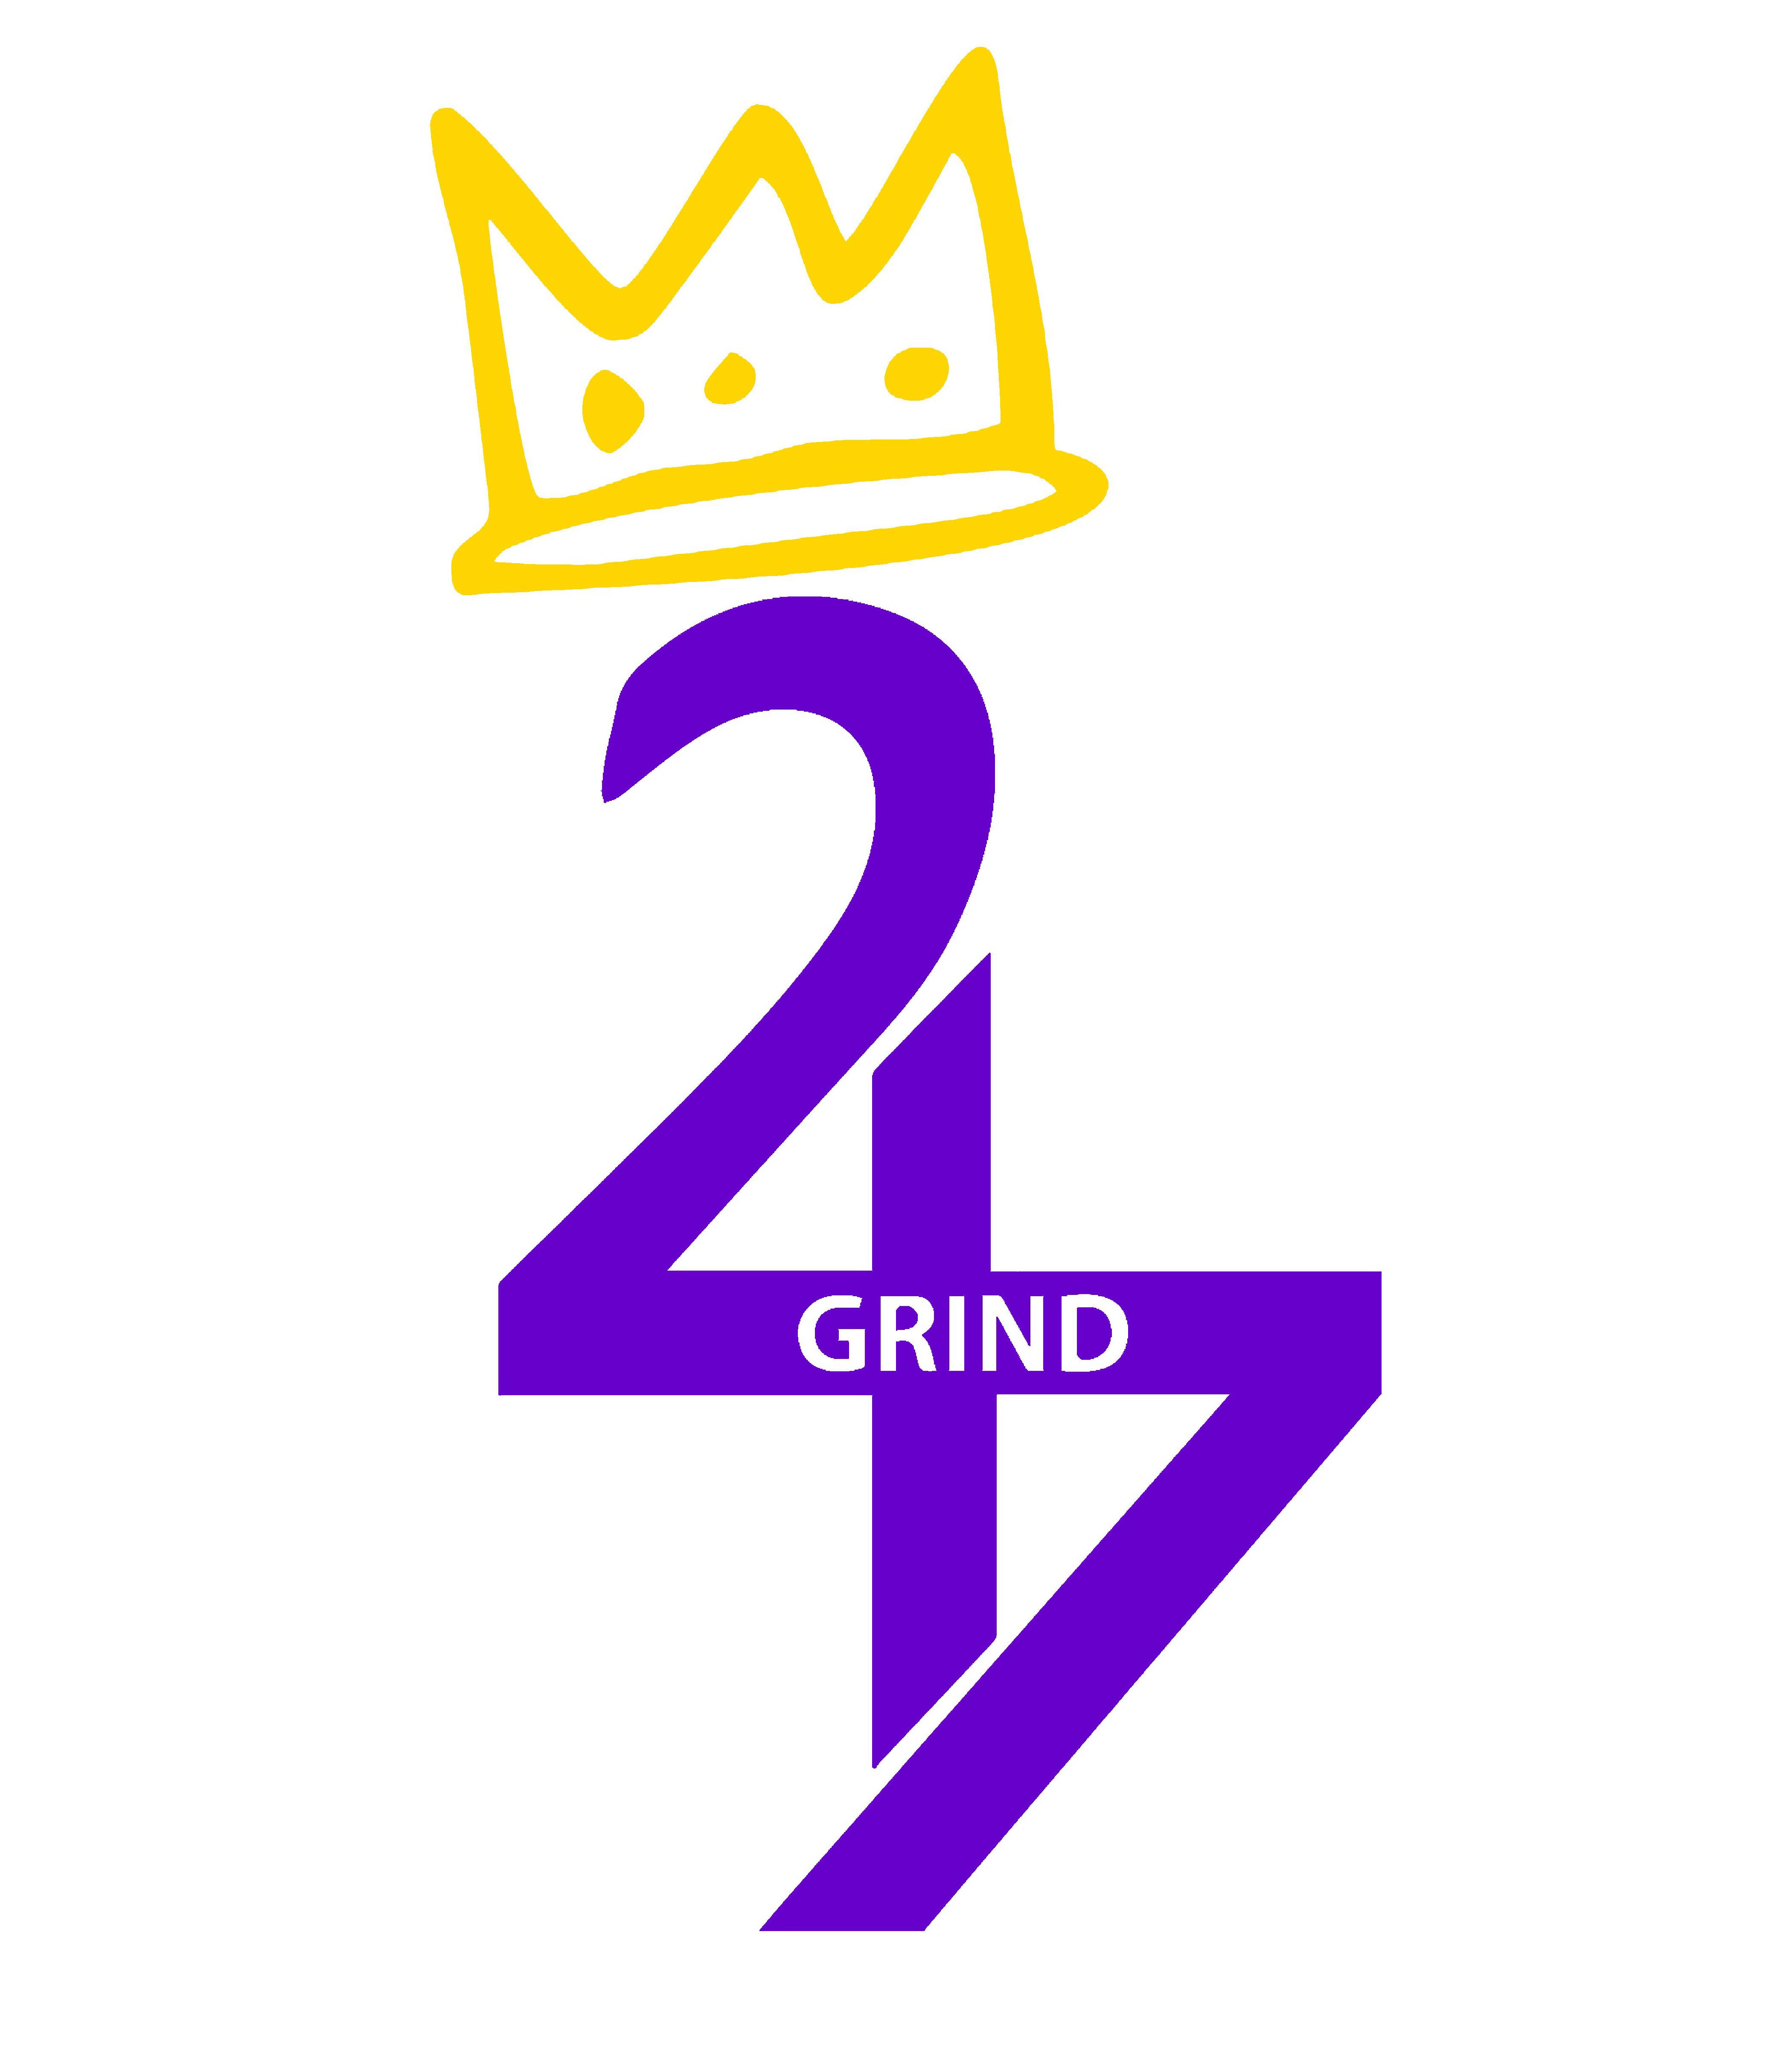  247 GRIND